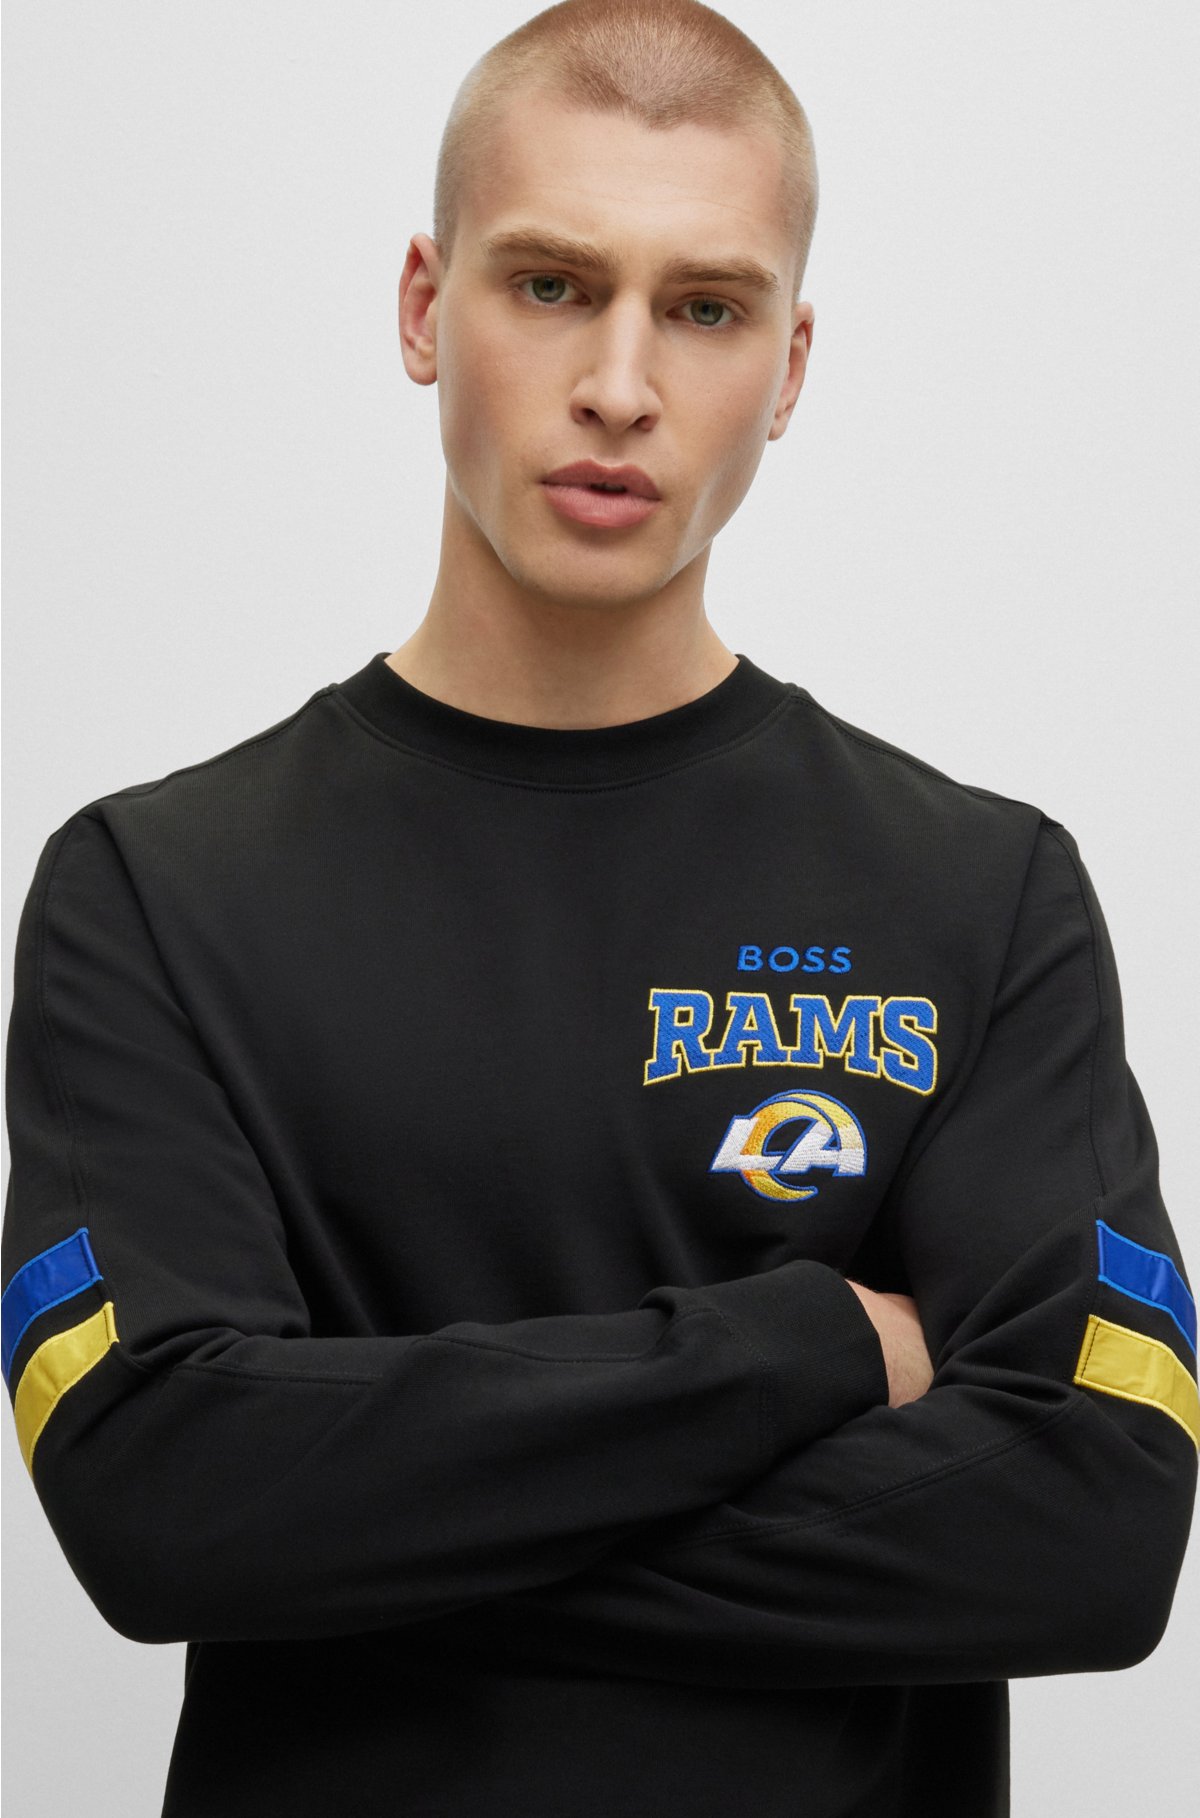 BOSS x NFL cotton-terry sweatshirt with collaborative branding, Rams